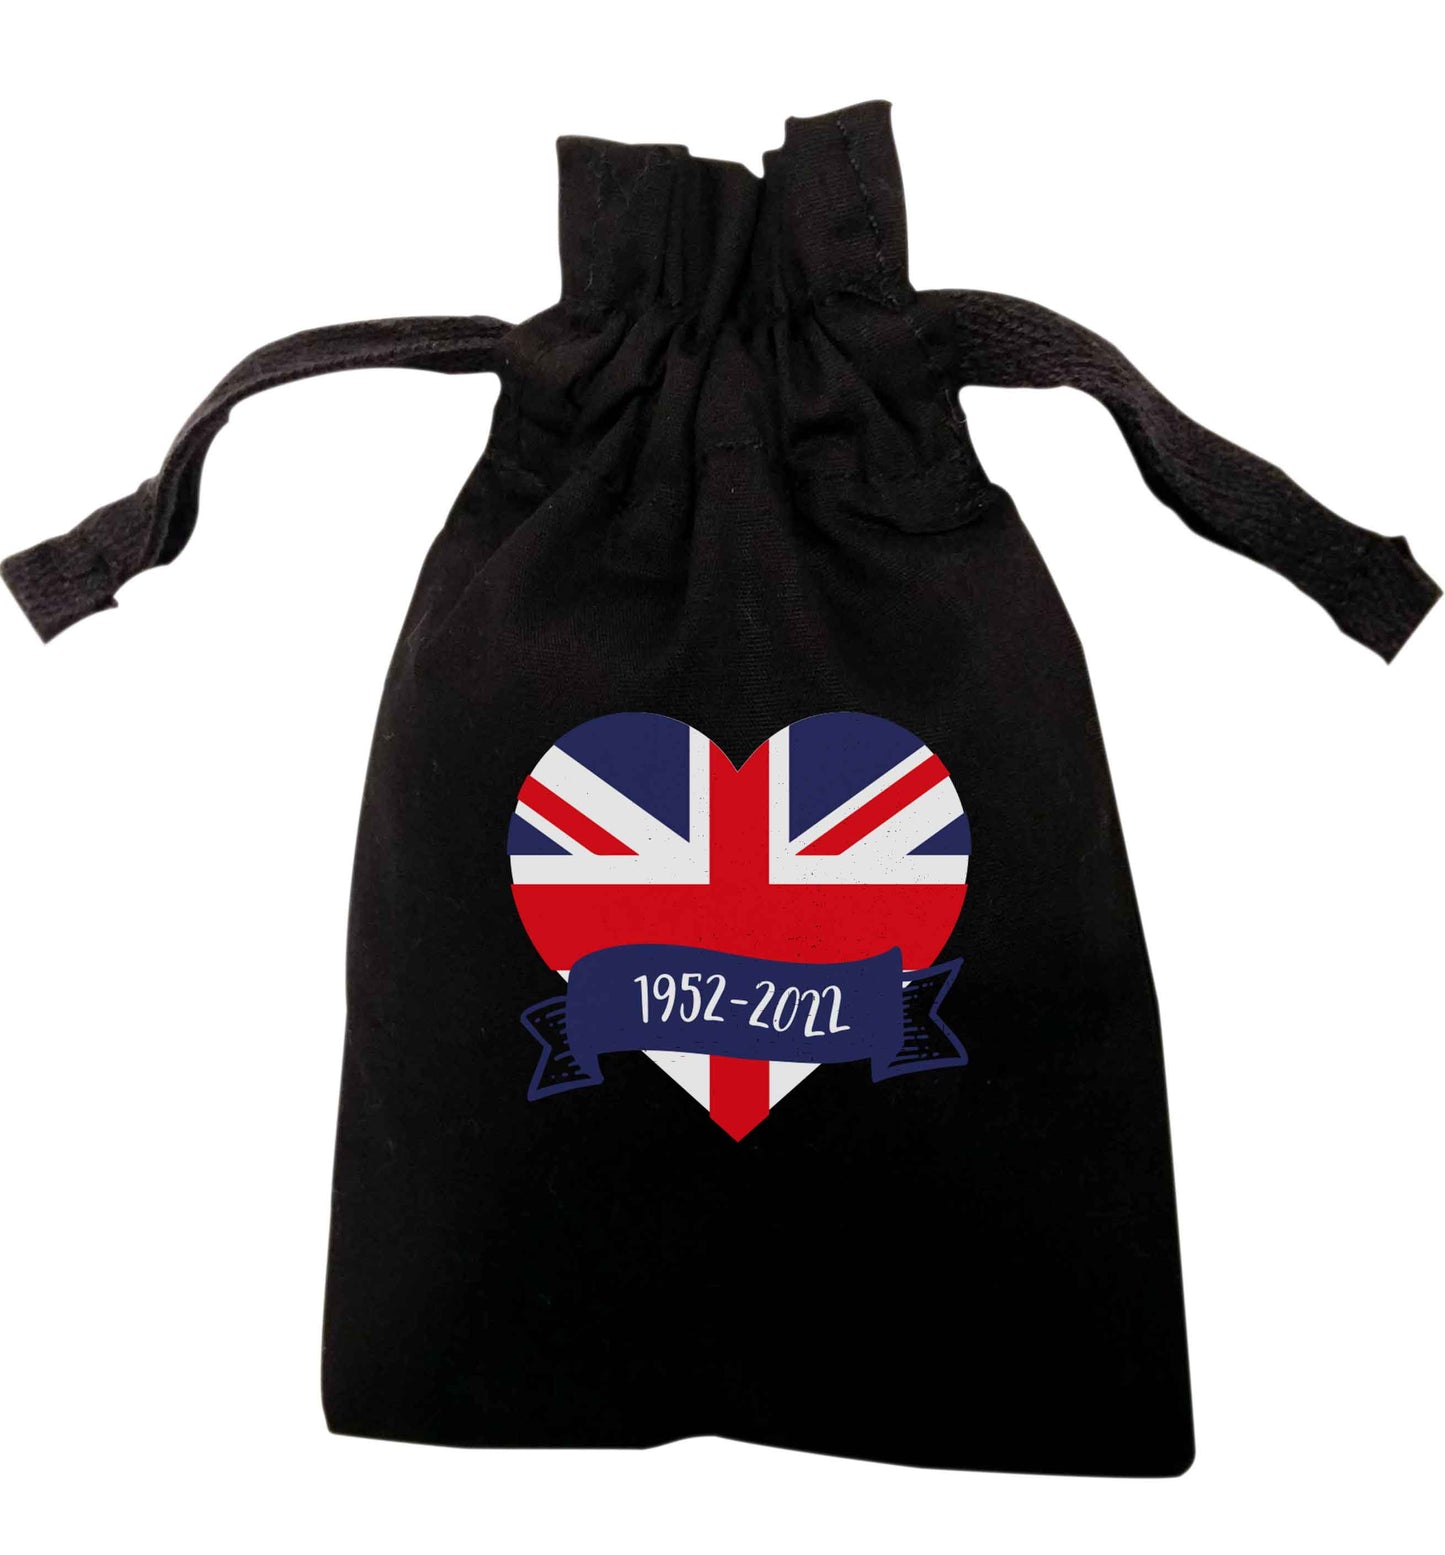 British flag heart Queens jubilee | XS - L | Pouch / Drawstring bag / Sack | Organic Cotton | Bulk discounts available!